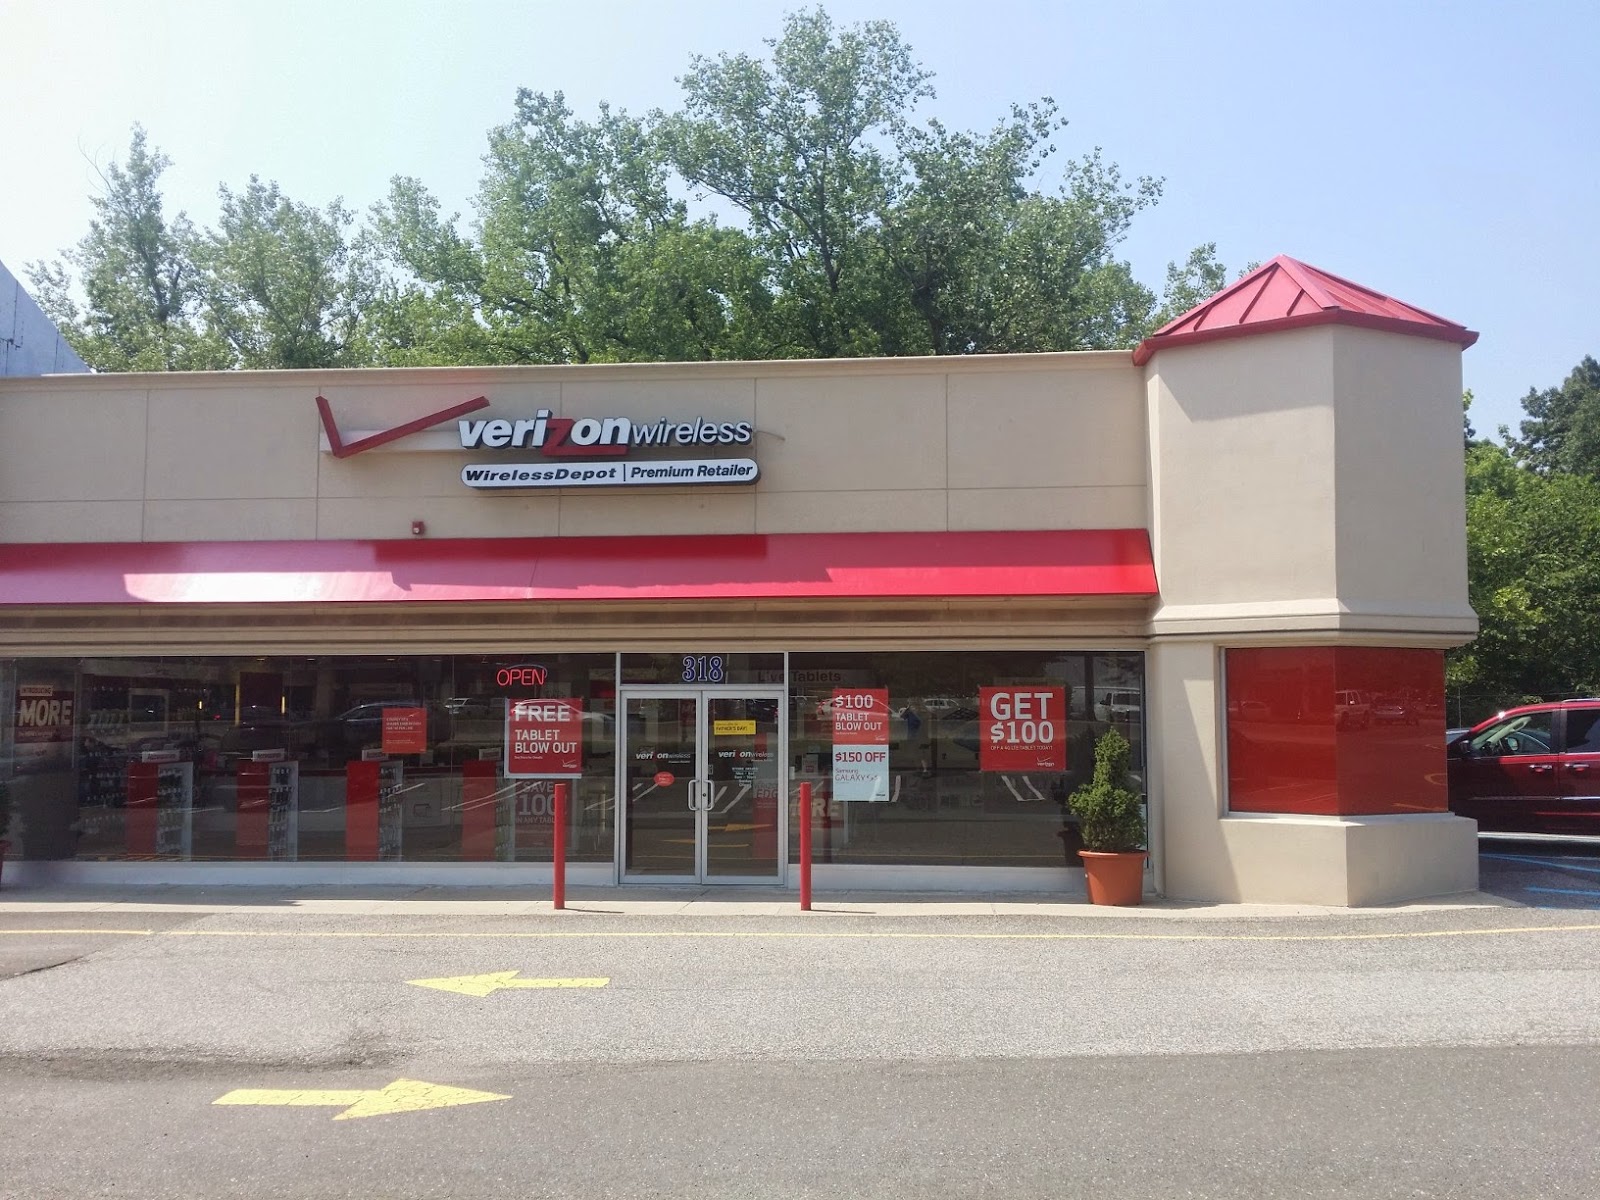 Photo of Verizon Wireless Premium Retailer / Wireless Depot in Paramus City, New Jersey, United States - 1 Picture of Point of interest, Establishment, Store